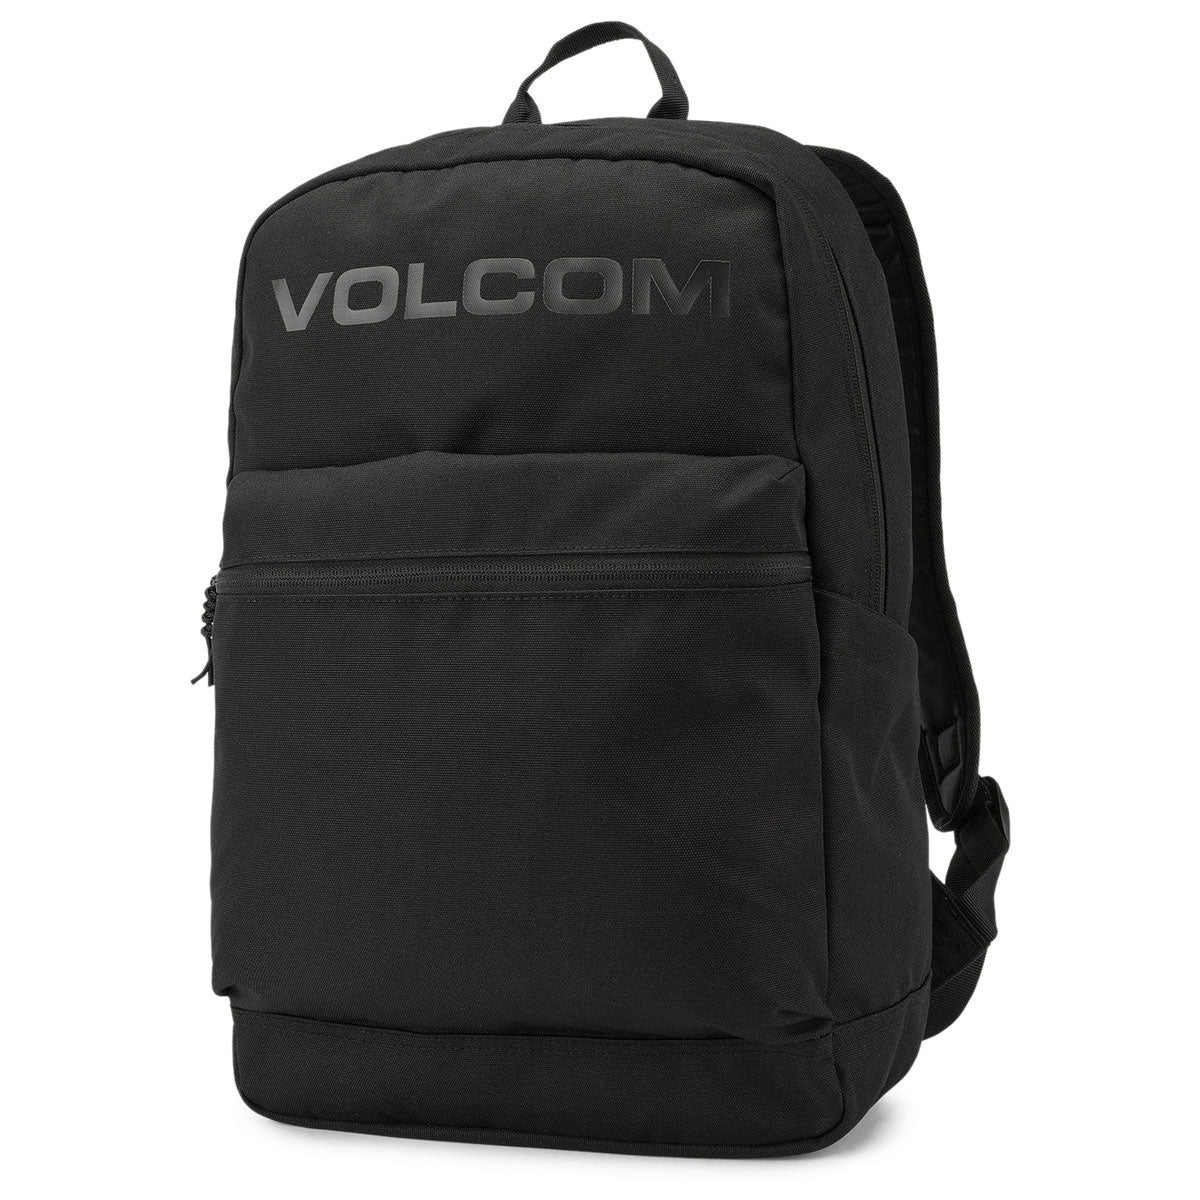 Volcom School Backpack - Black On Black image 1